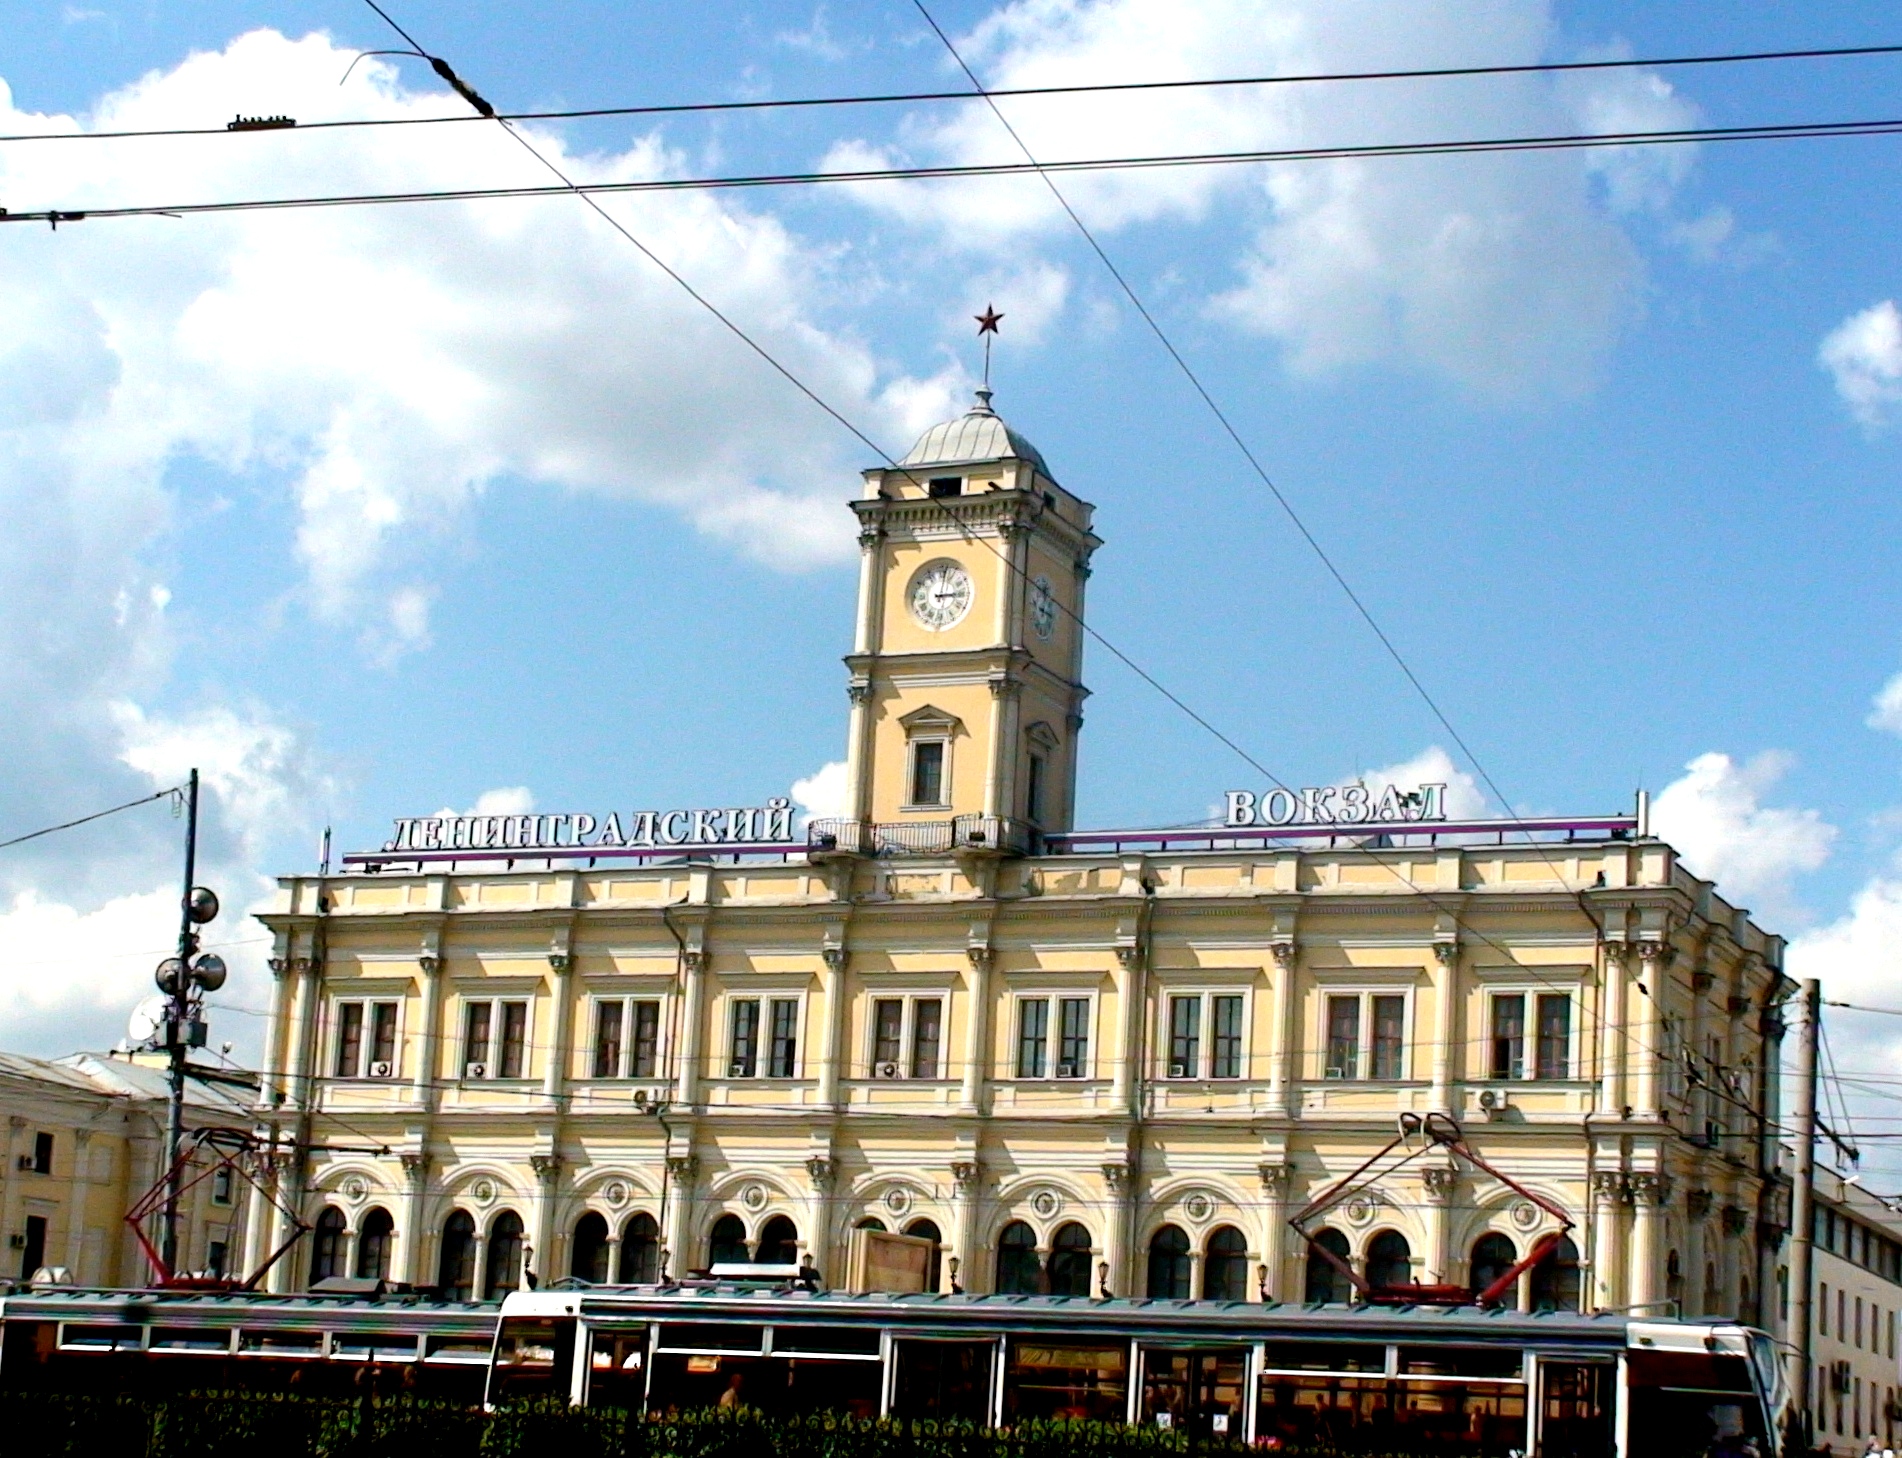 Ленинградский вокзал